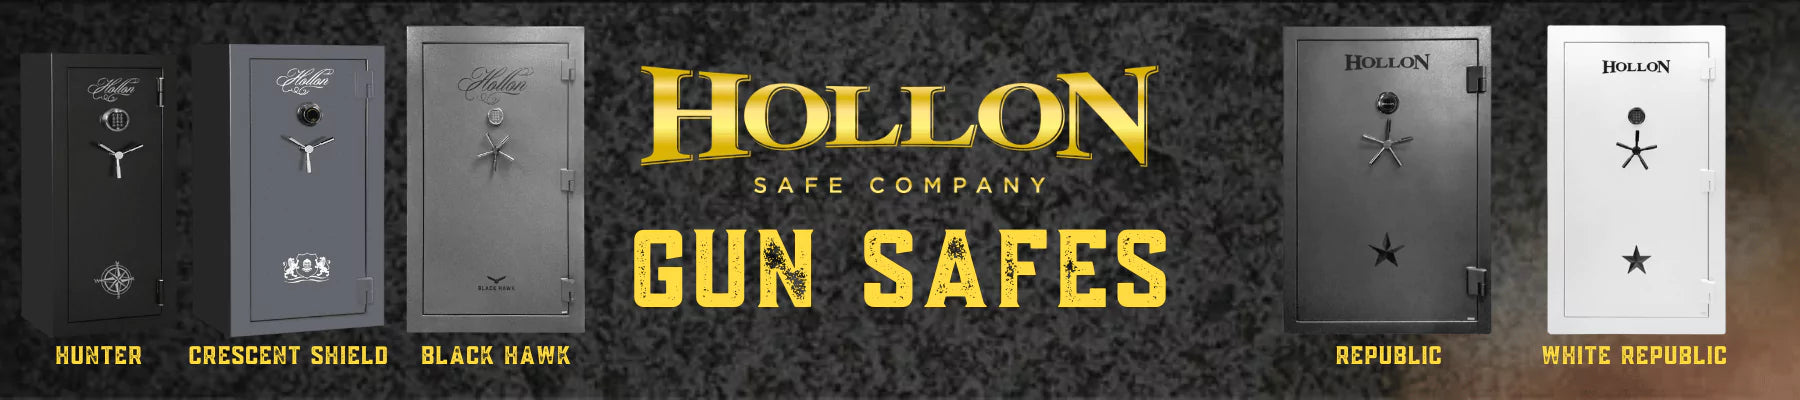 Hollon Gun Safes Collection Page Banner